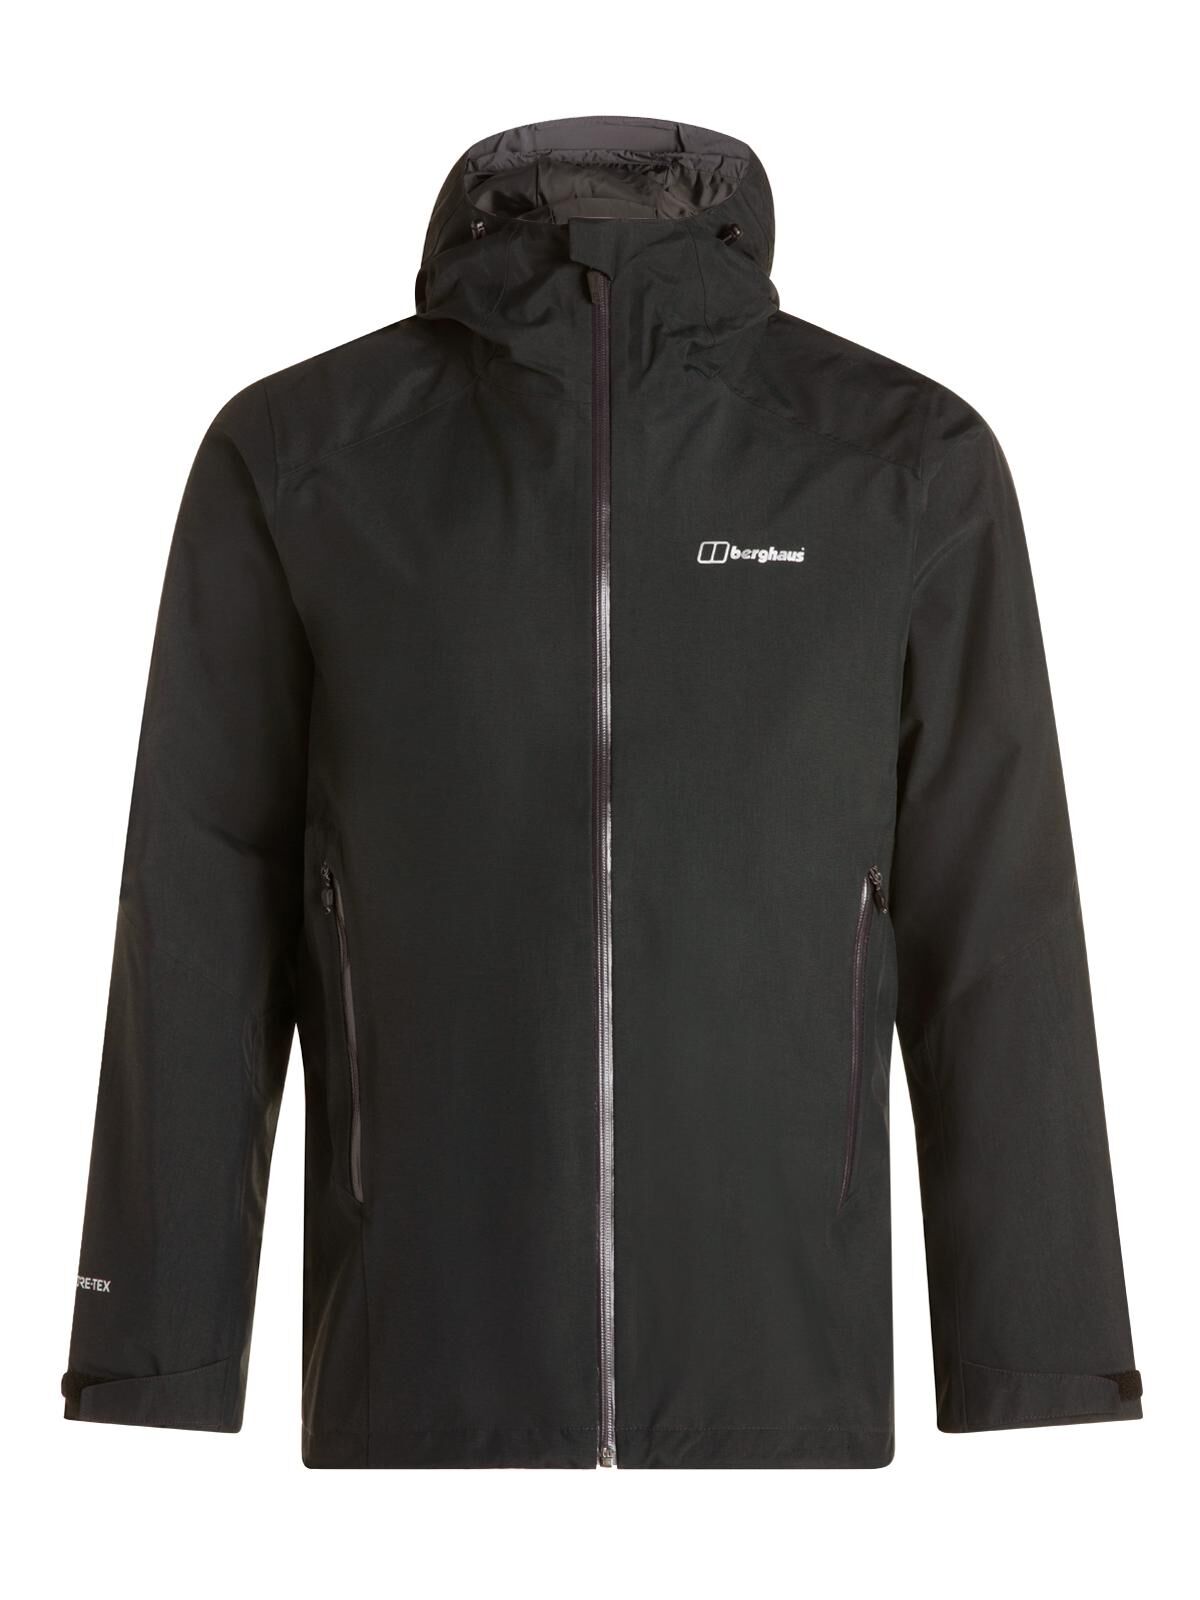 Berghaus Ridgemaster GTX Waterproof Jacket - Waterproof jacket - Men's